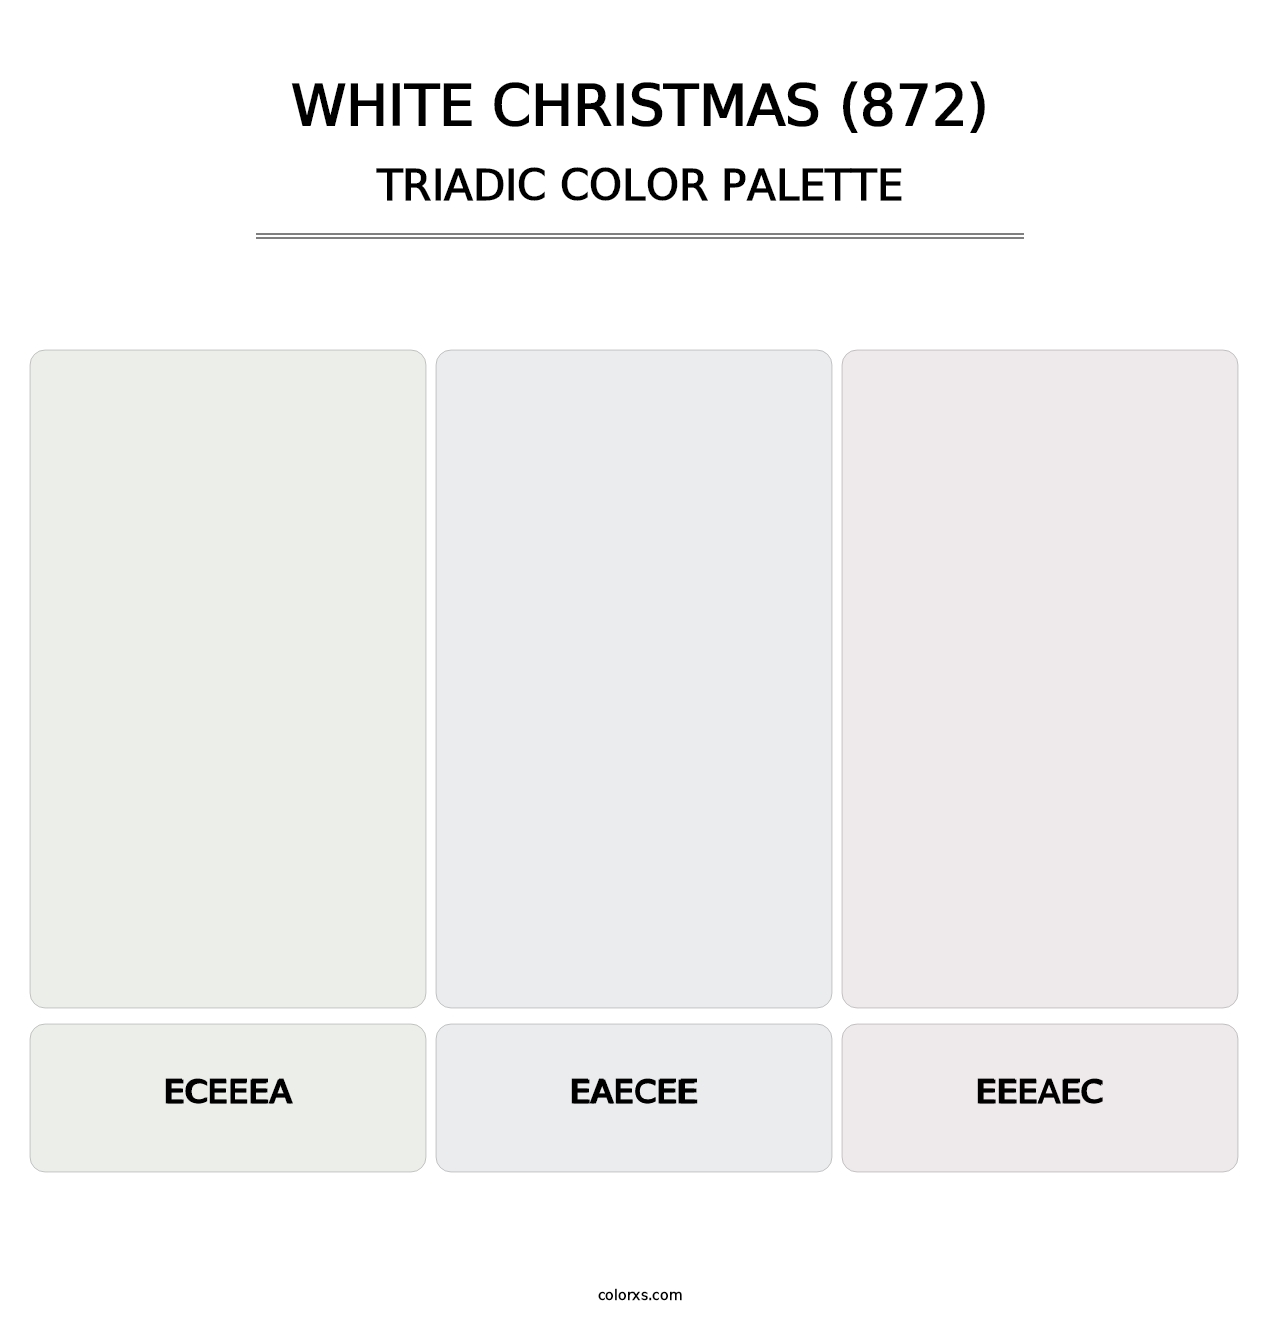 White Christmas (872) - Triadic Color Palette